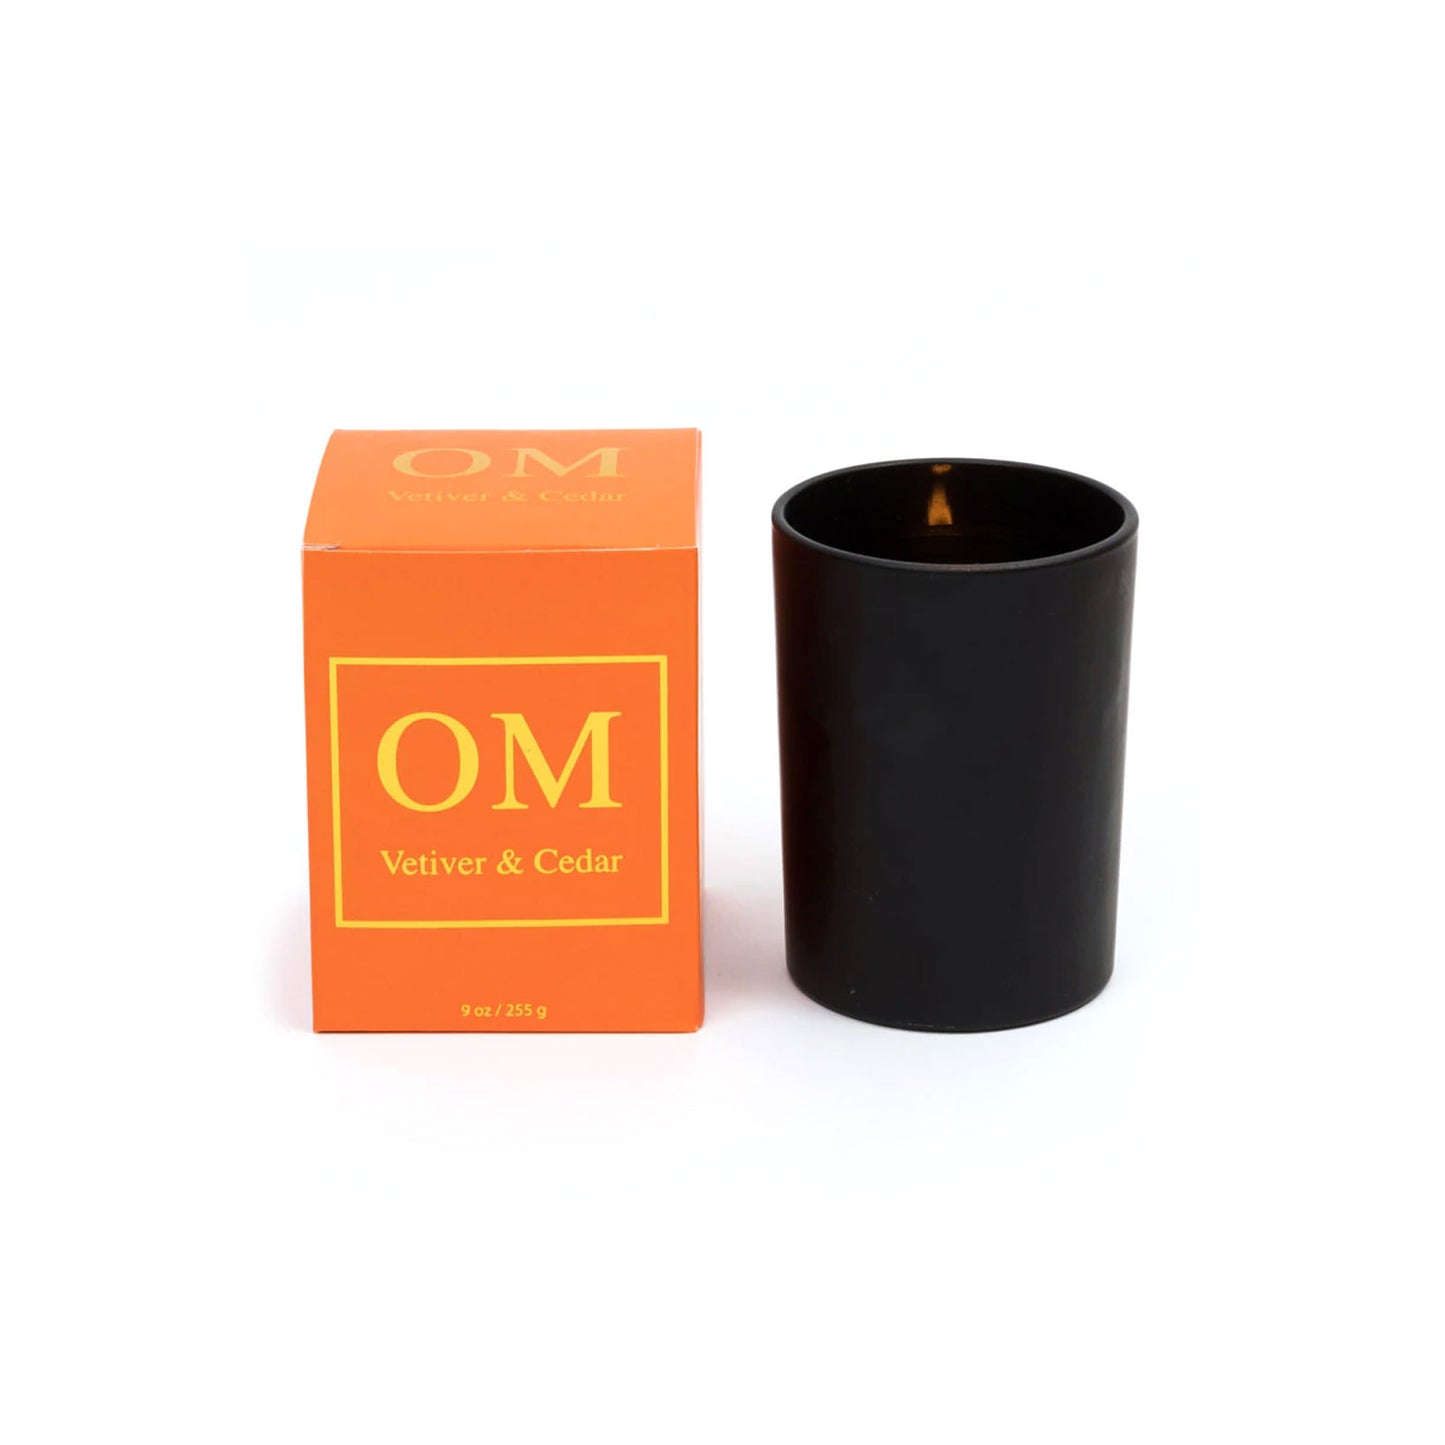 'OM' Vetiver & Cedar Essential Oil Soy Wax Candle